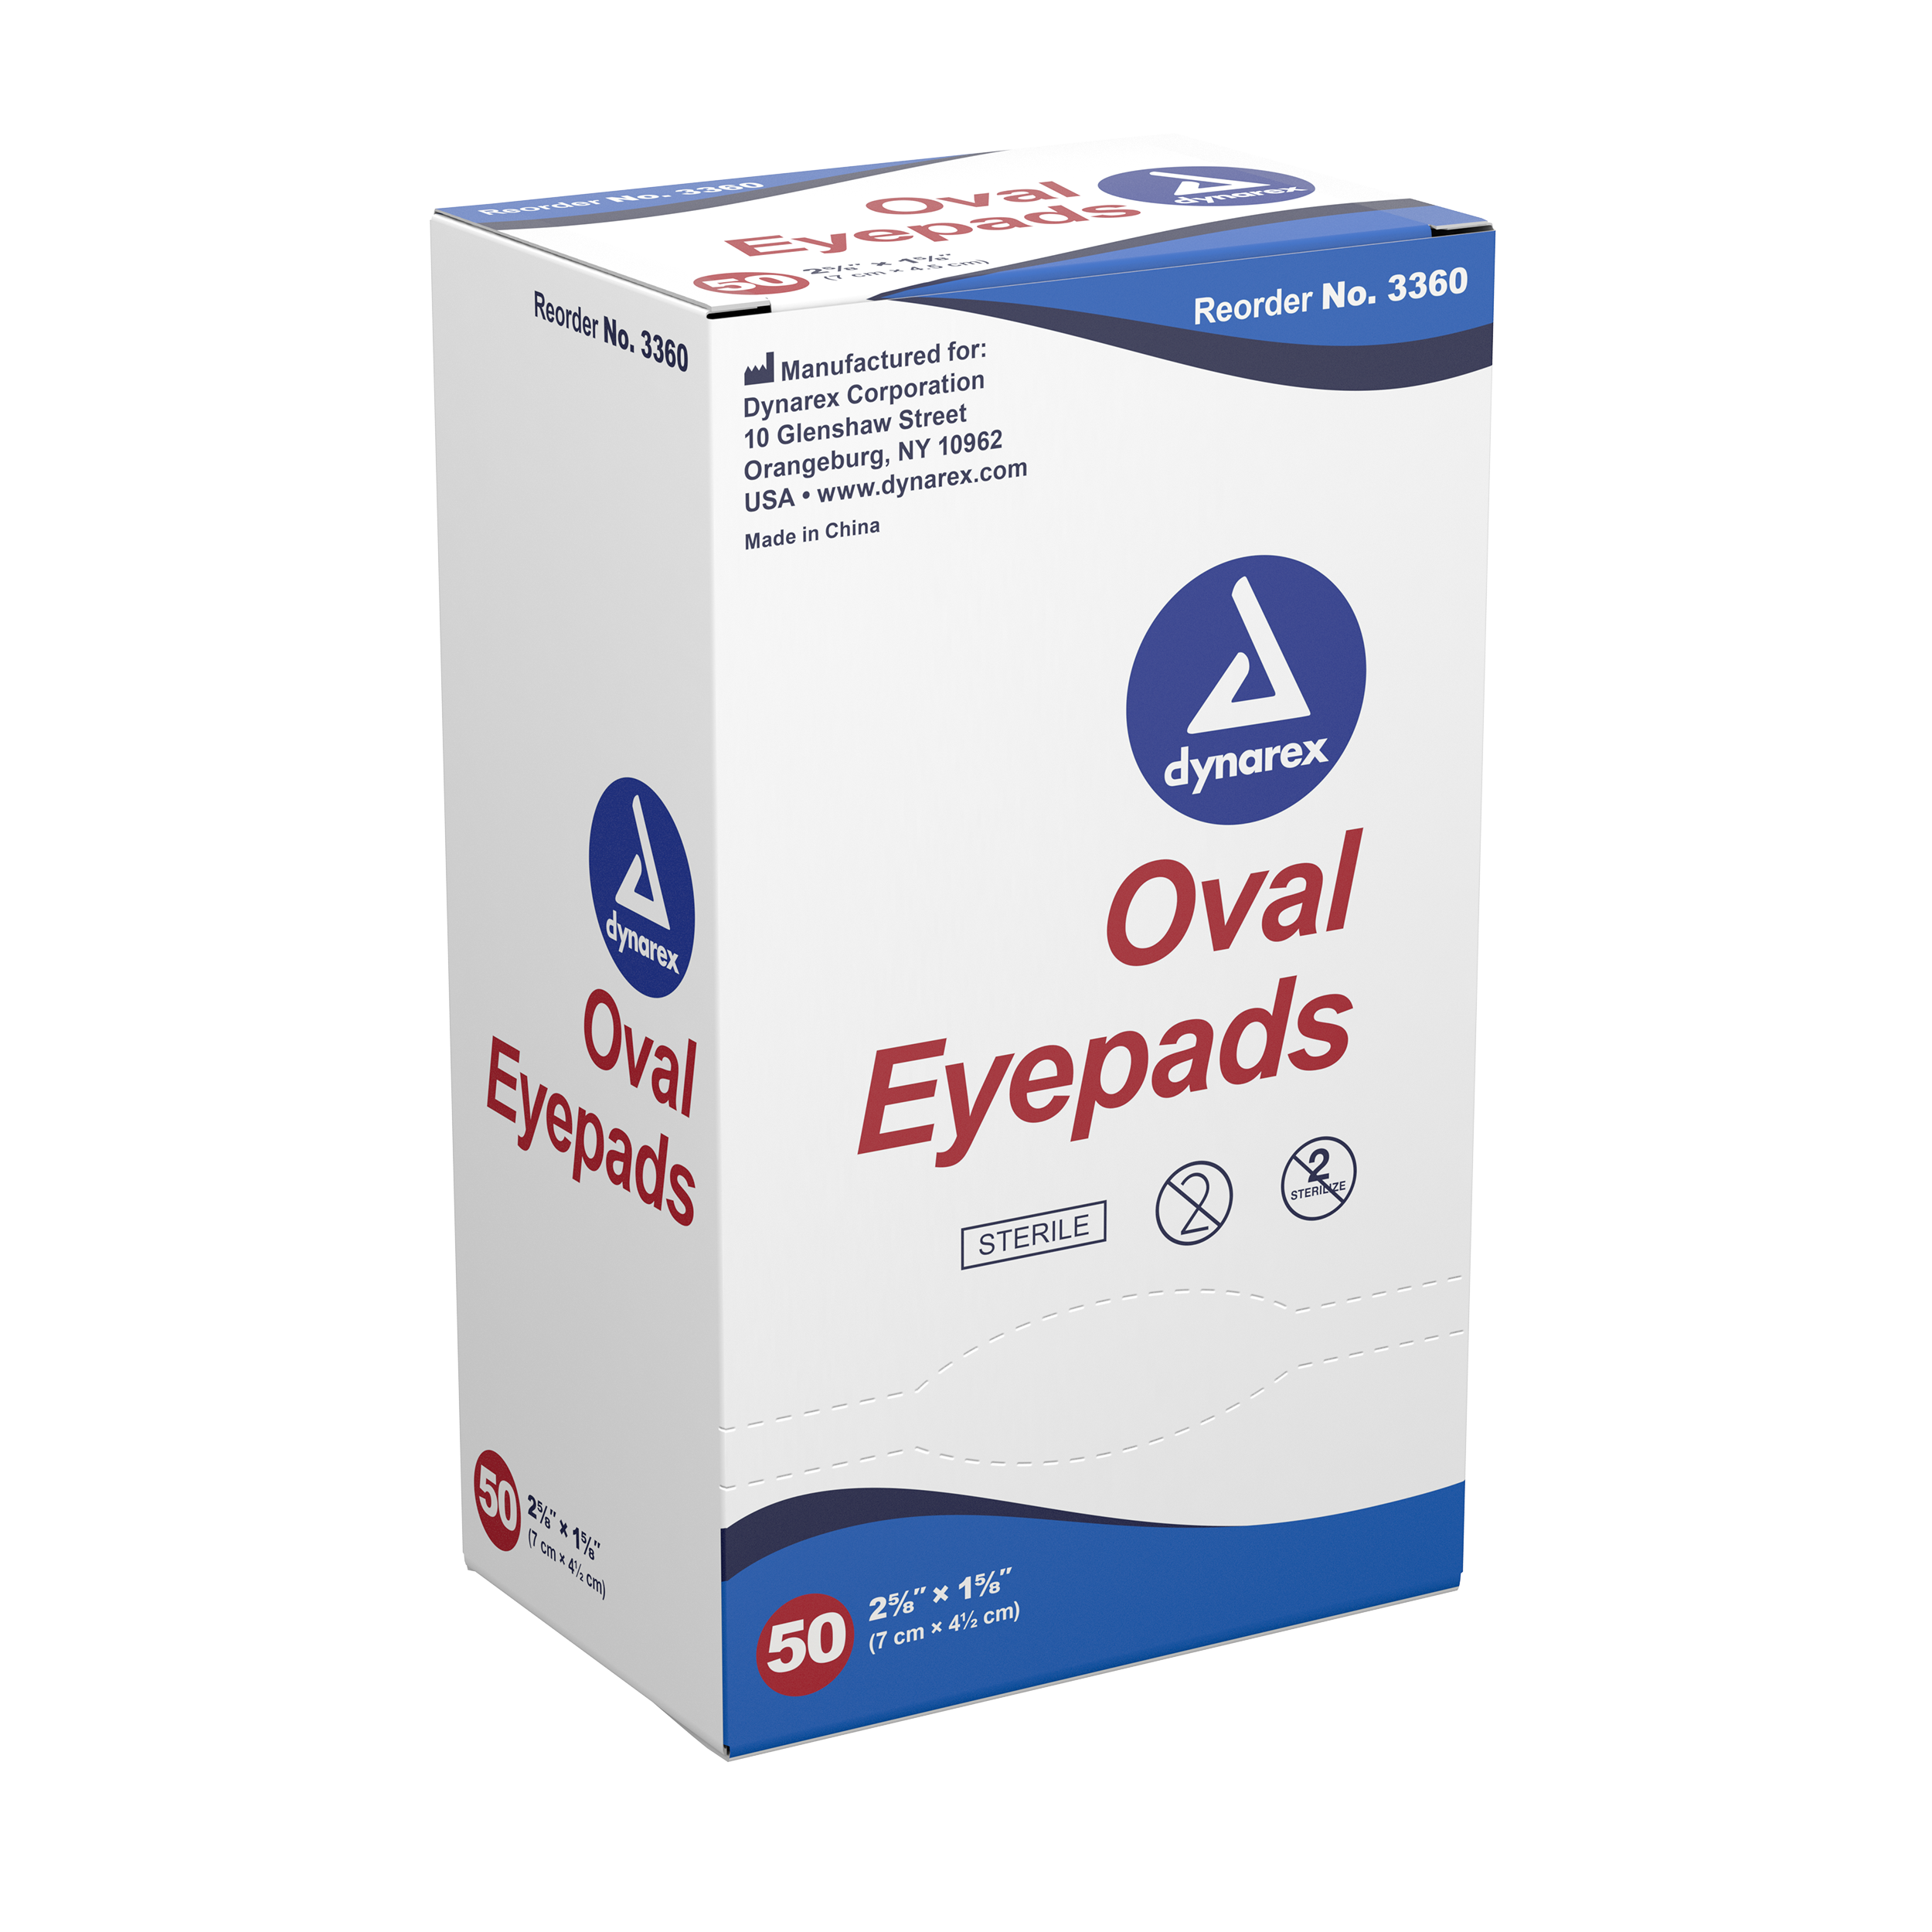 Oval Eye Pads — Sterile, 1 ⅝